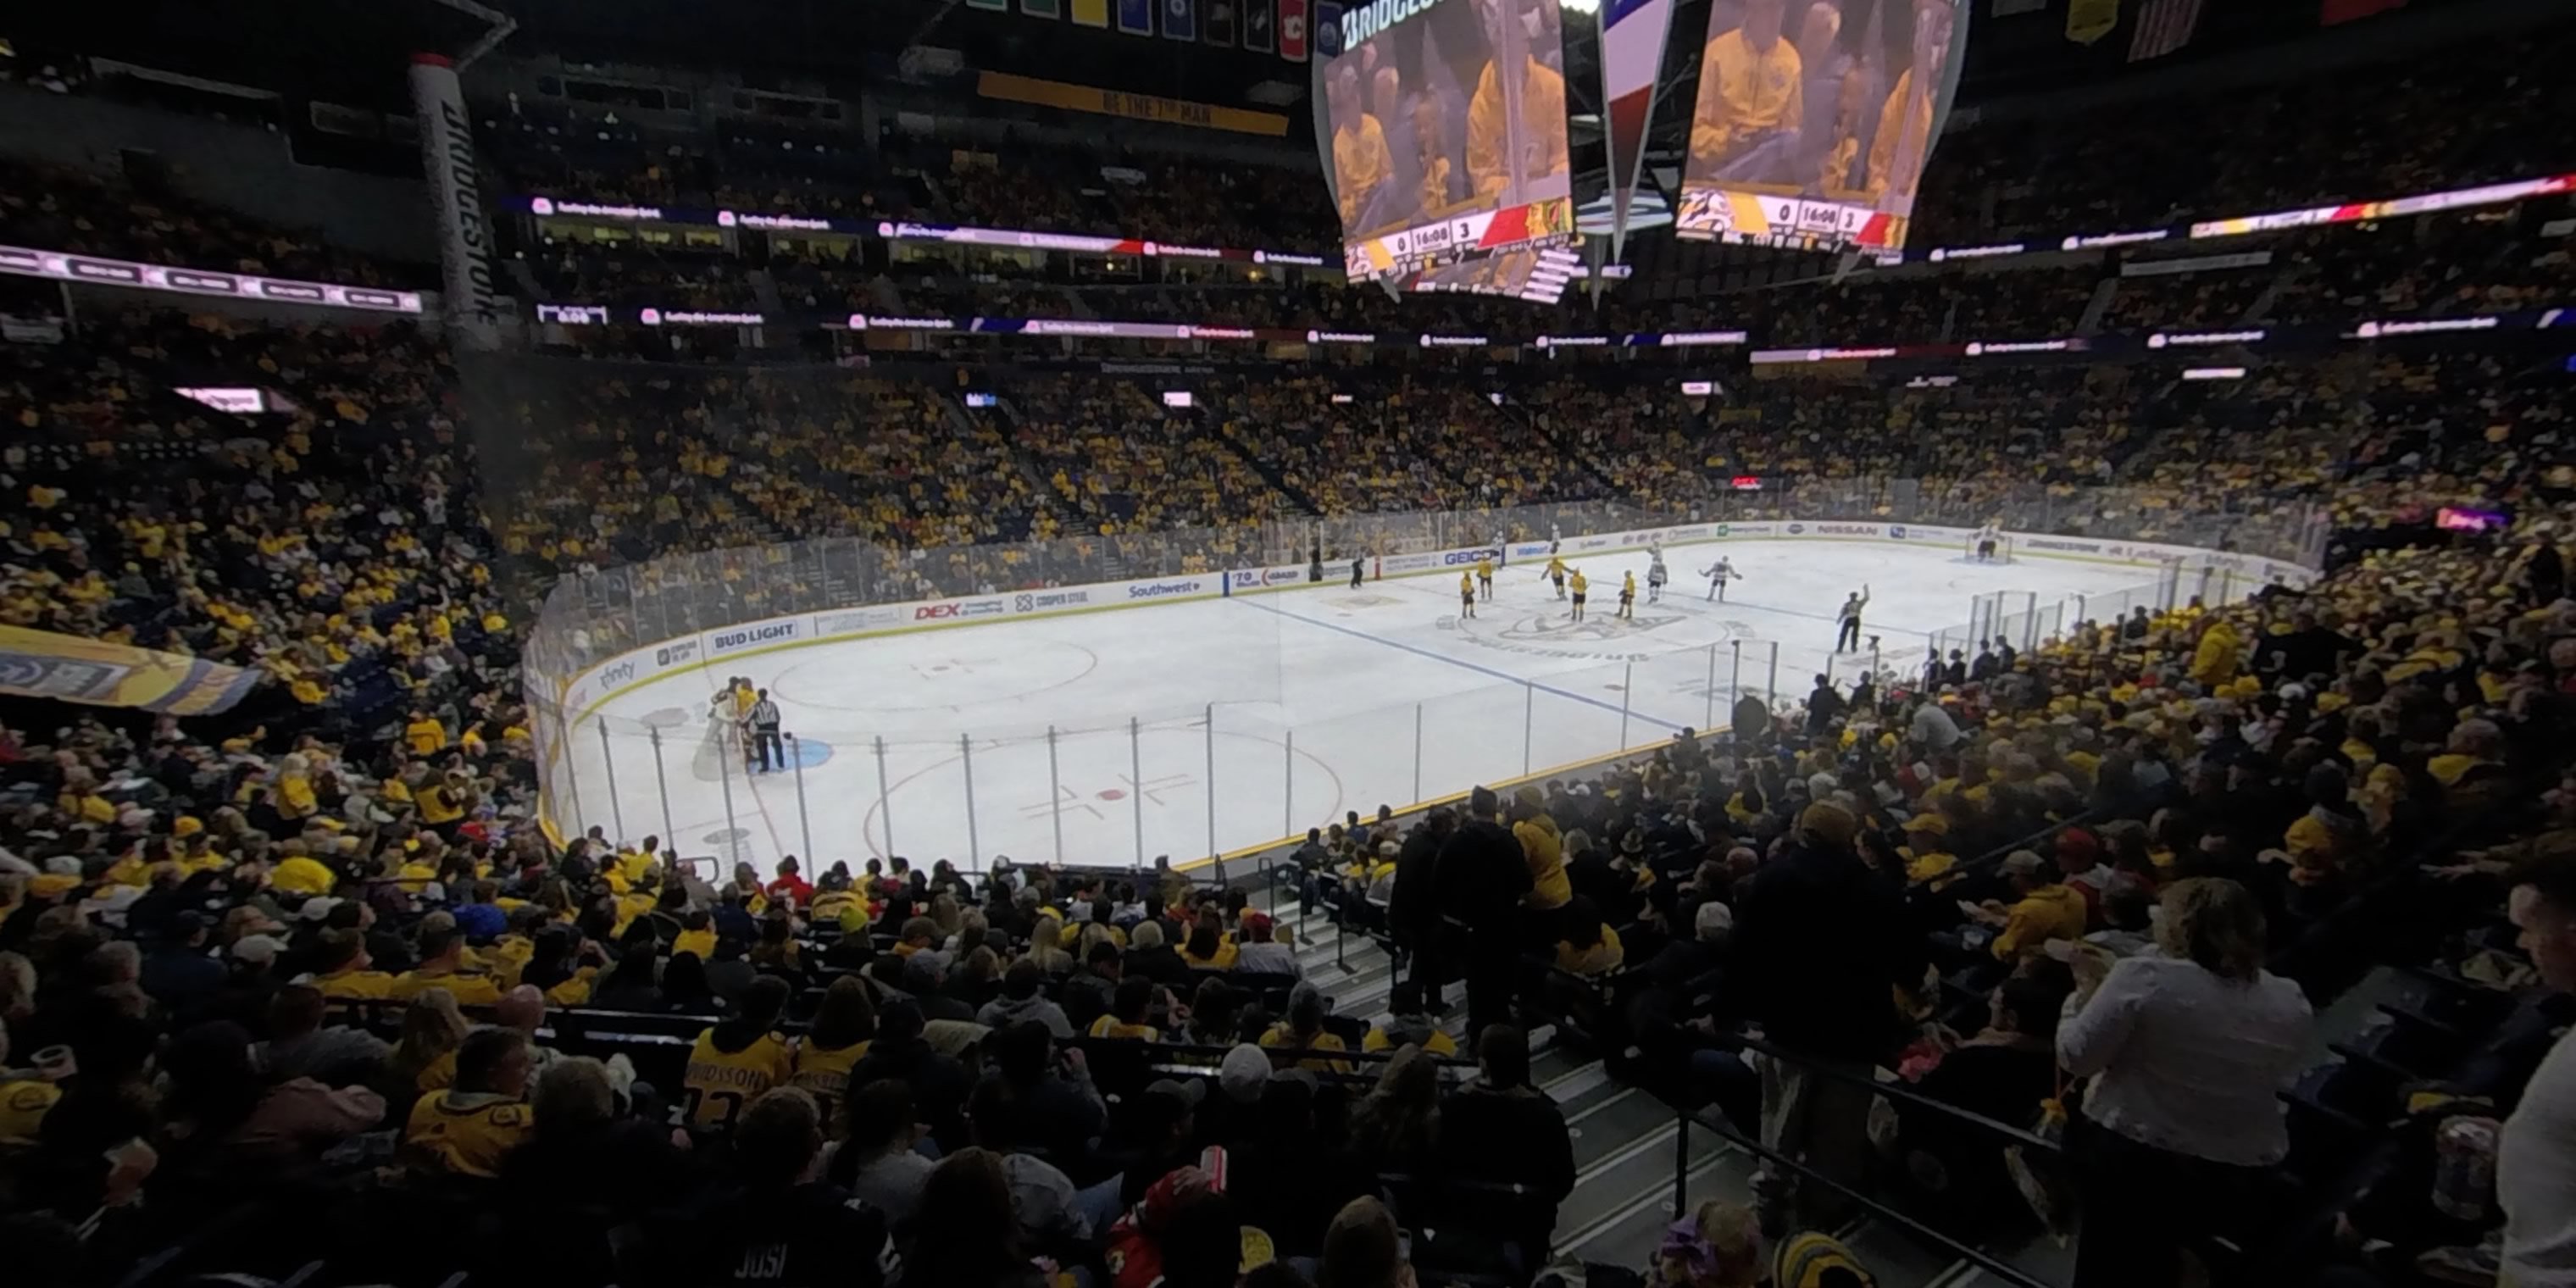 section 113 panoramic seat view  for hockey - bridgestone arena